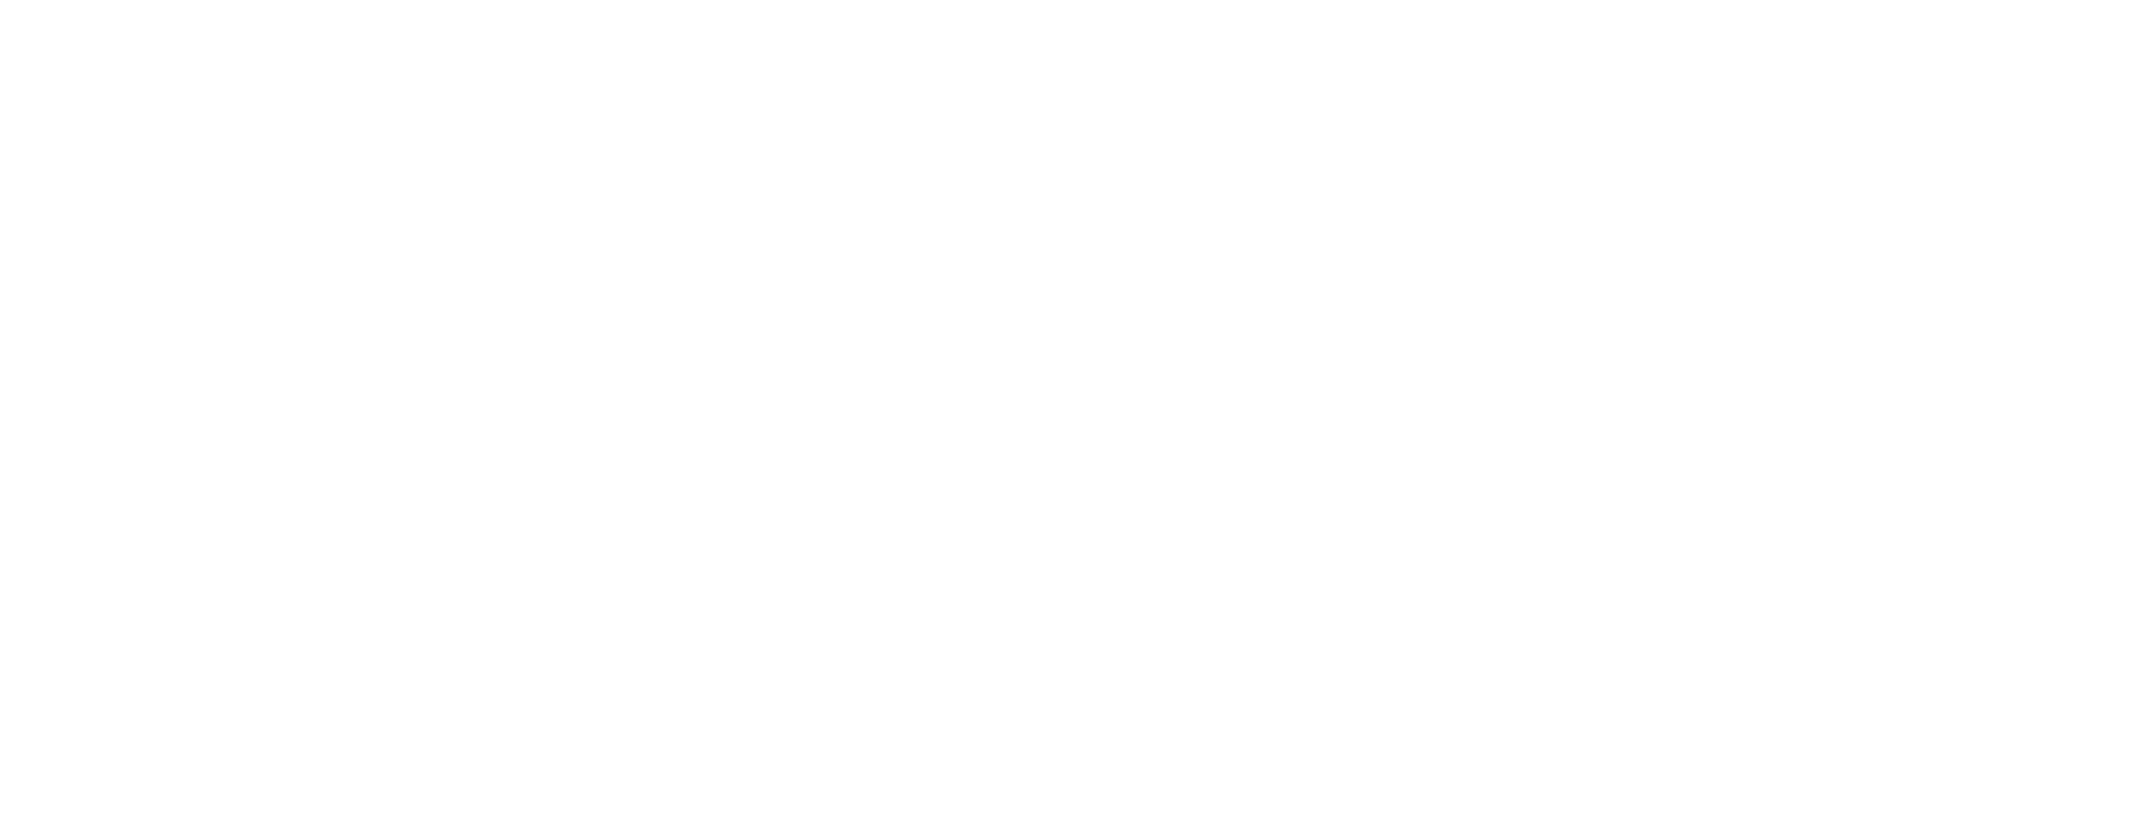 Swiss Air Cancellation Policy | Refund | Fee